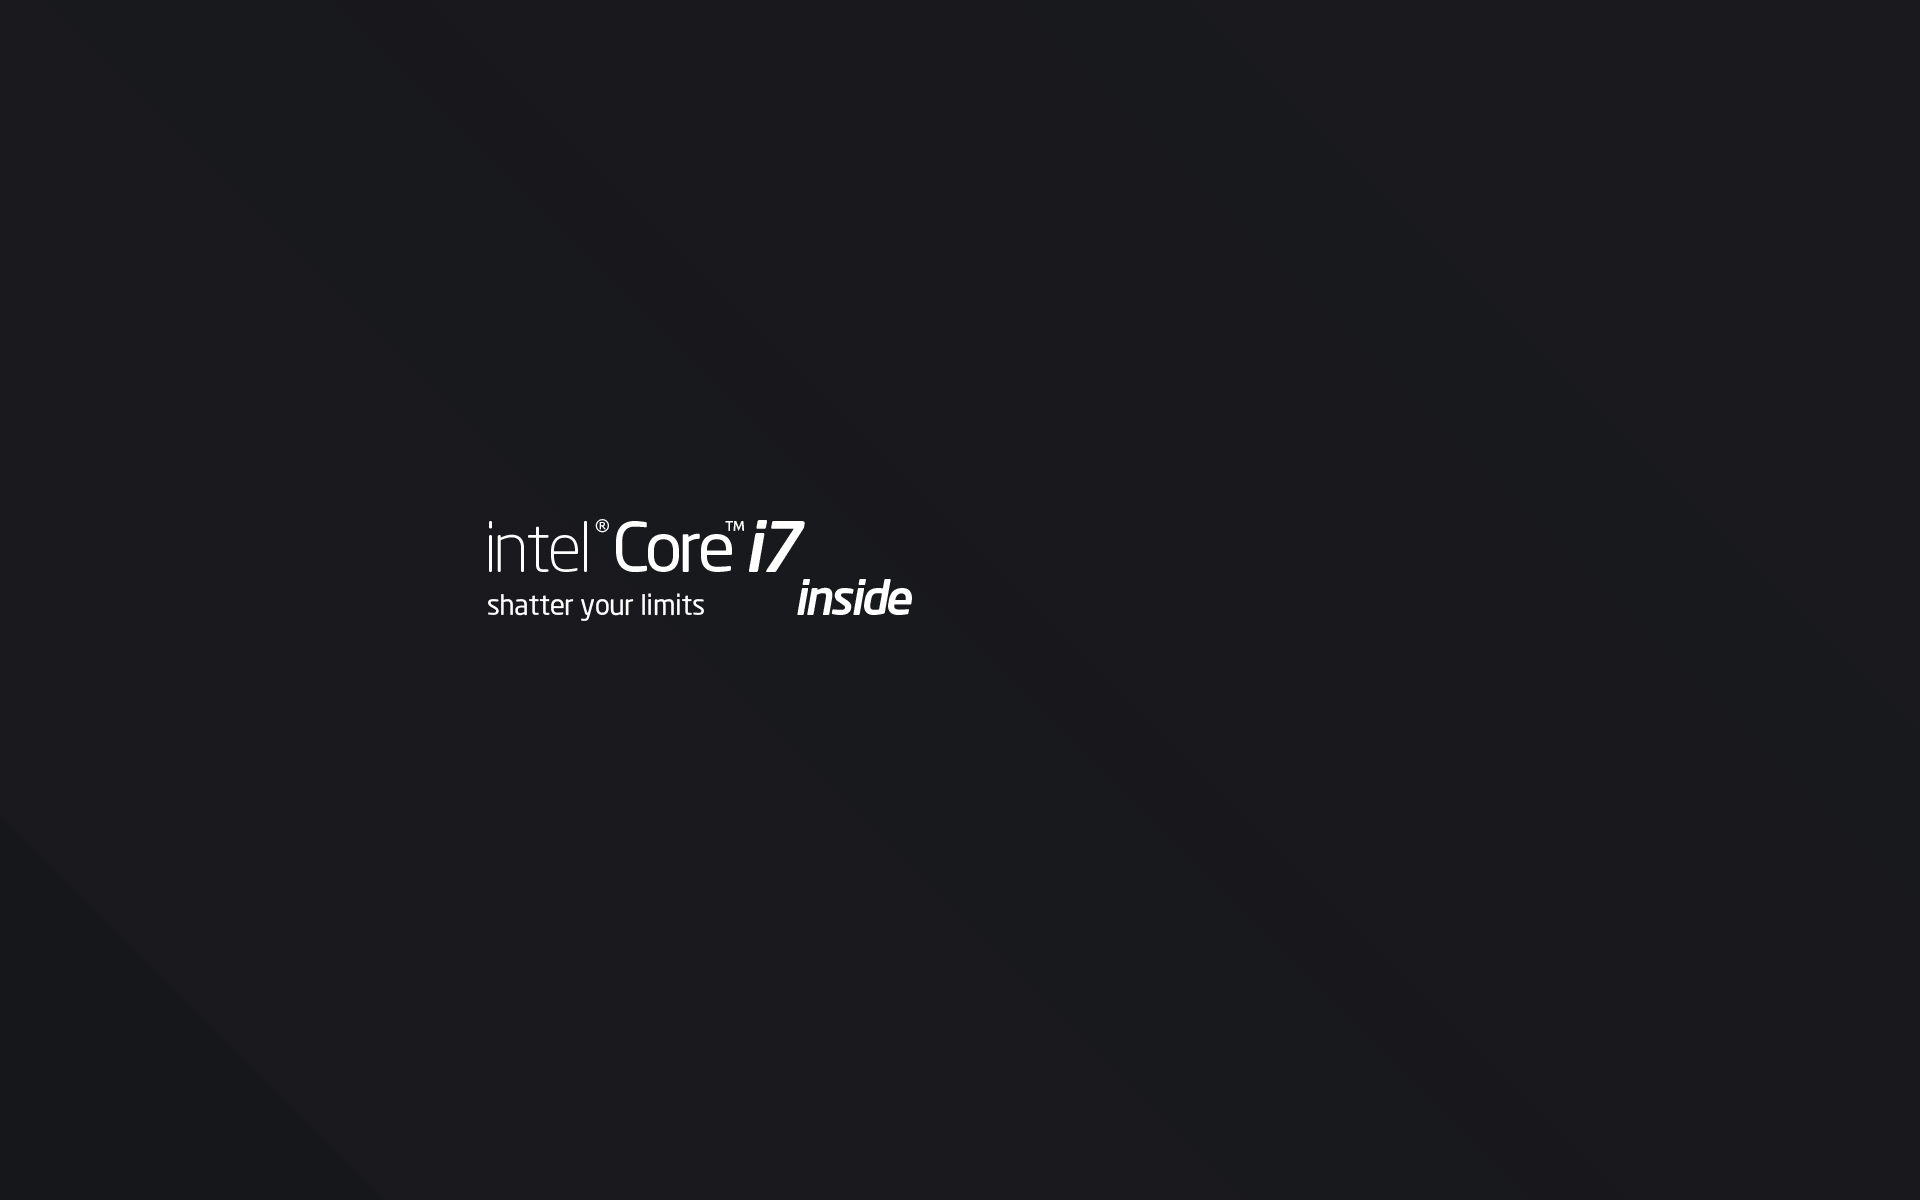 Intel core i7 by art e fact.jpg